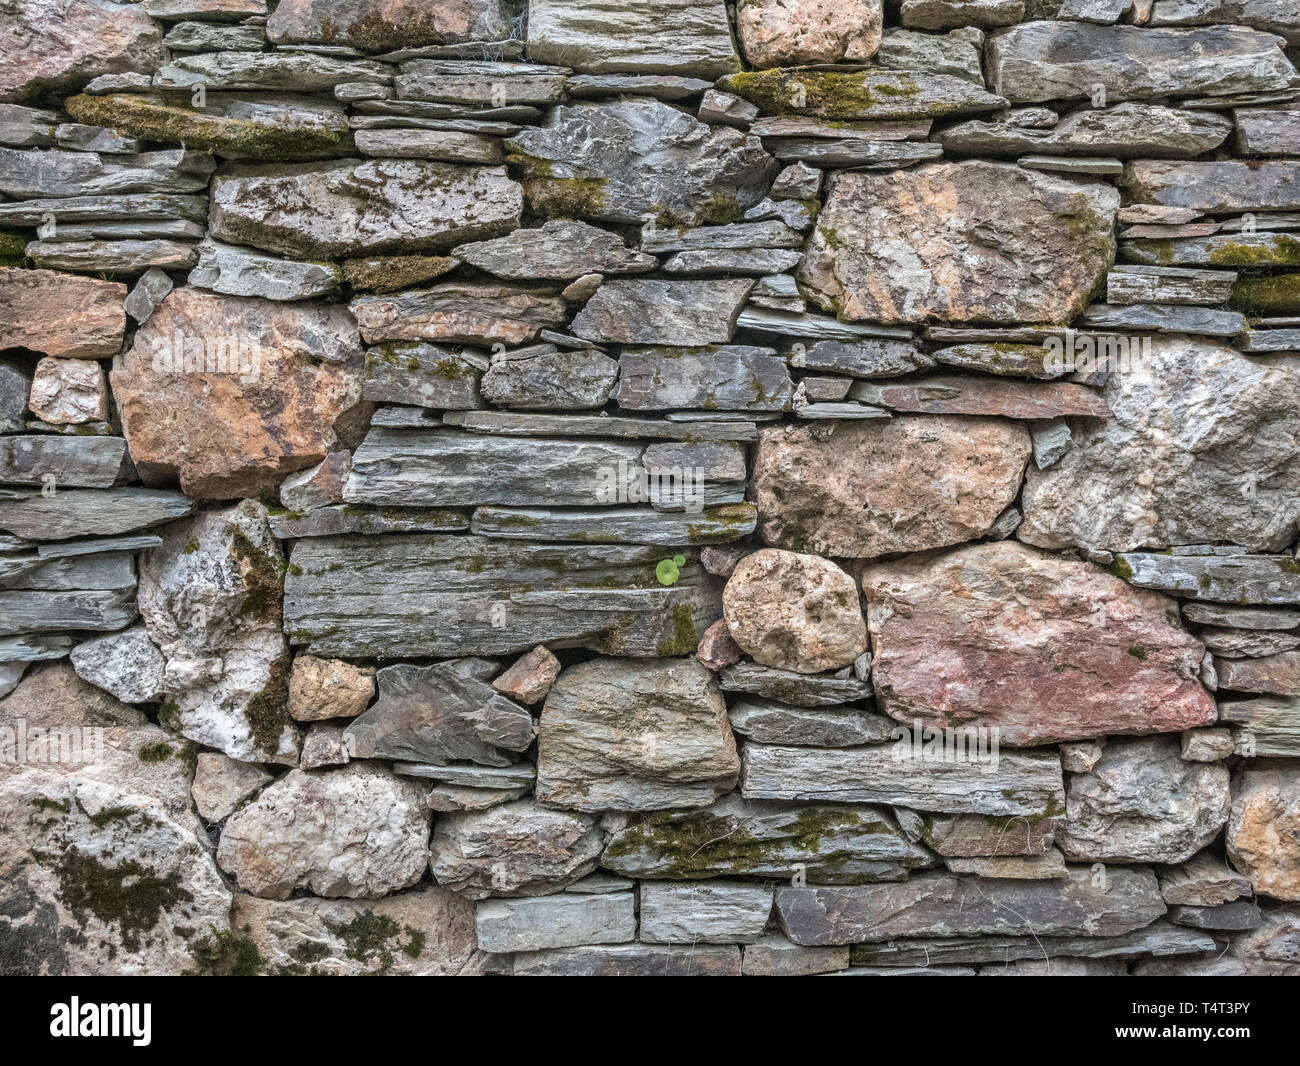 Randomly / ramshackle laid stone wall. Metaphor haphazard, uneven, irregular, variable, irregular stonework. Stock Photo